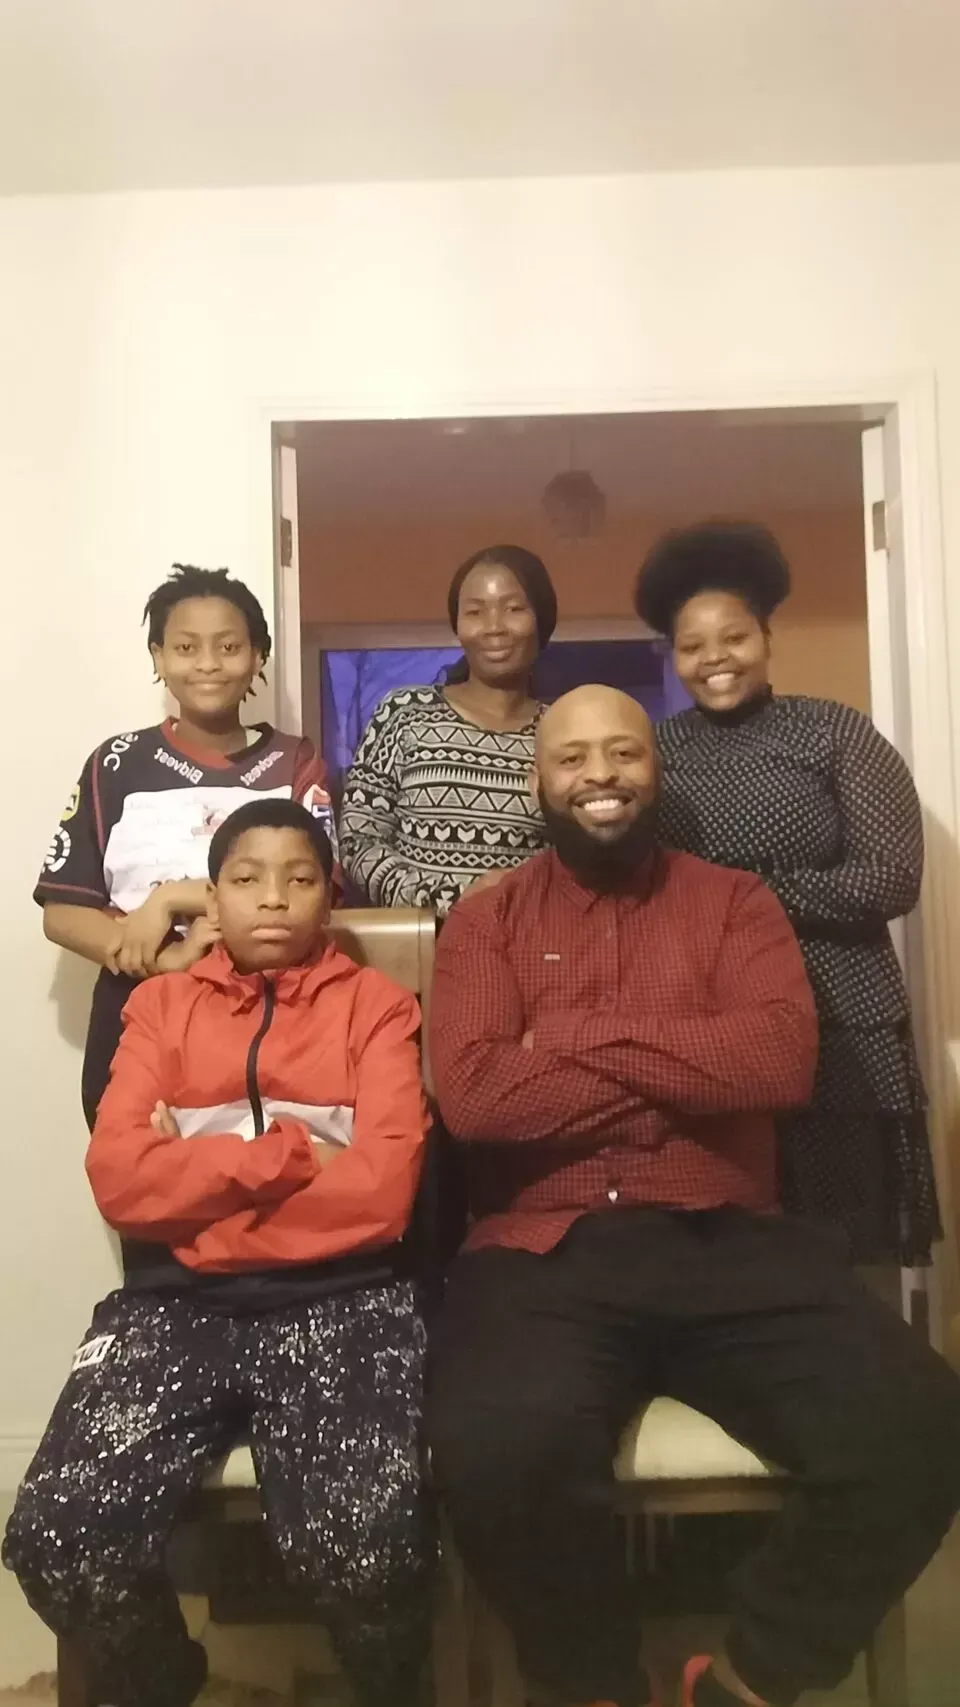 The Ntsimane Family